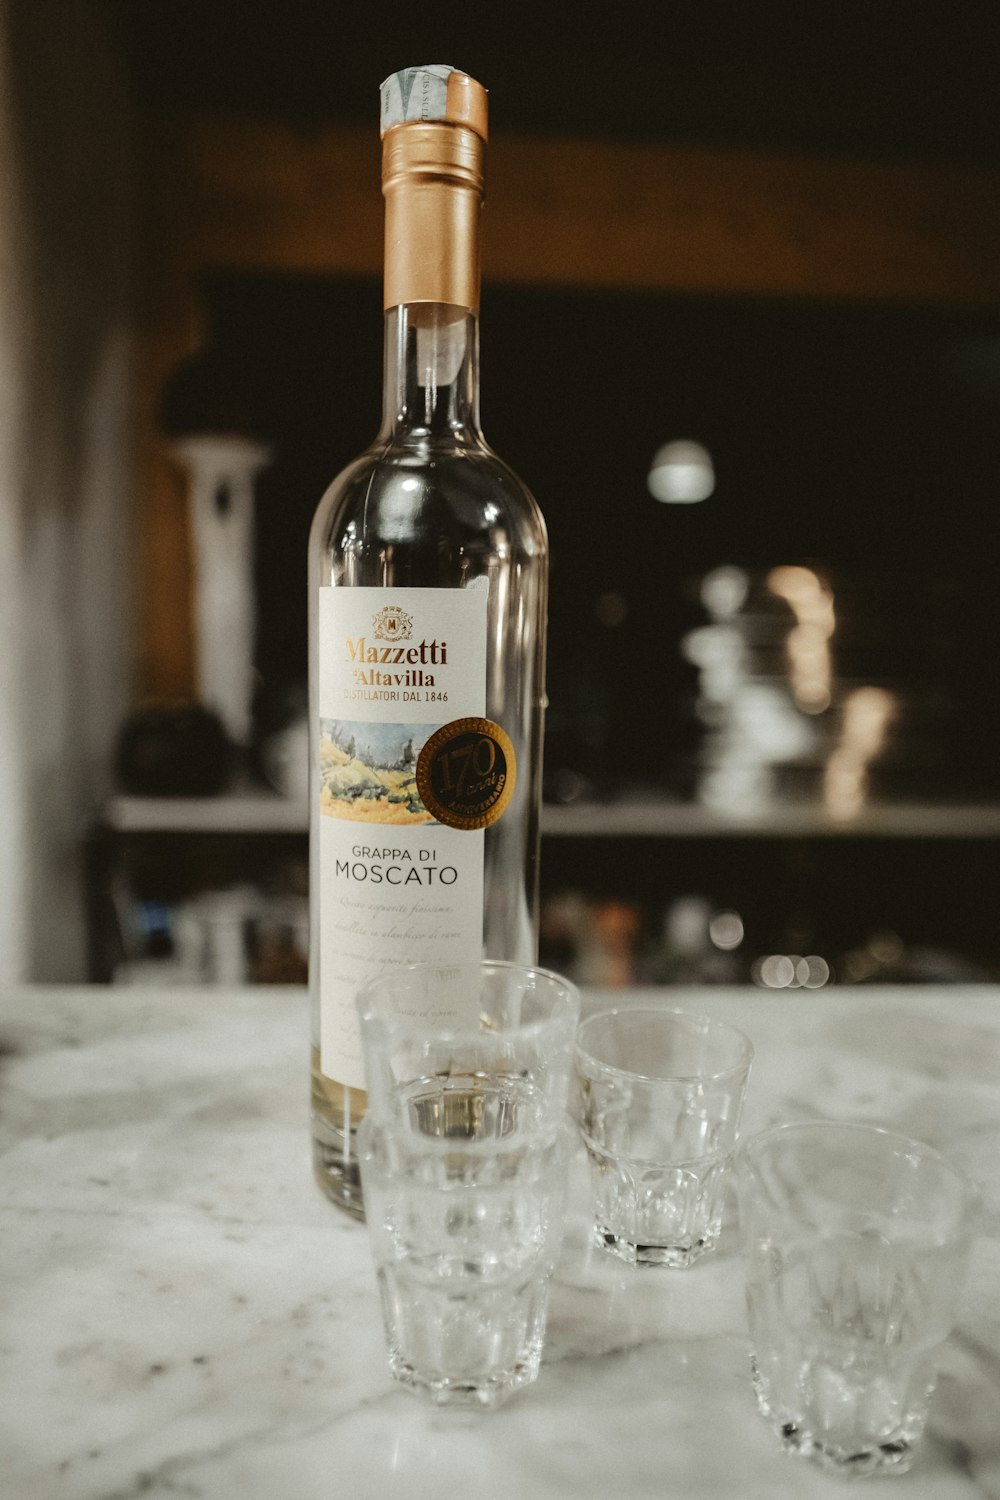 Mazzetti Altavilla moscato bottle with shot glasses on table